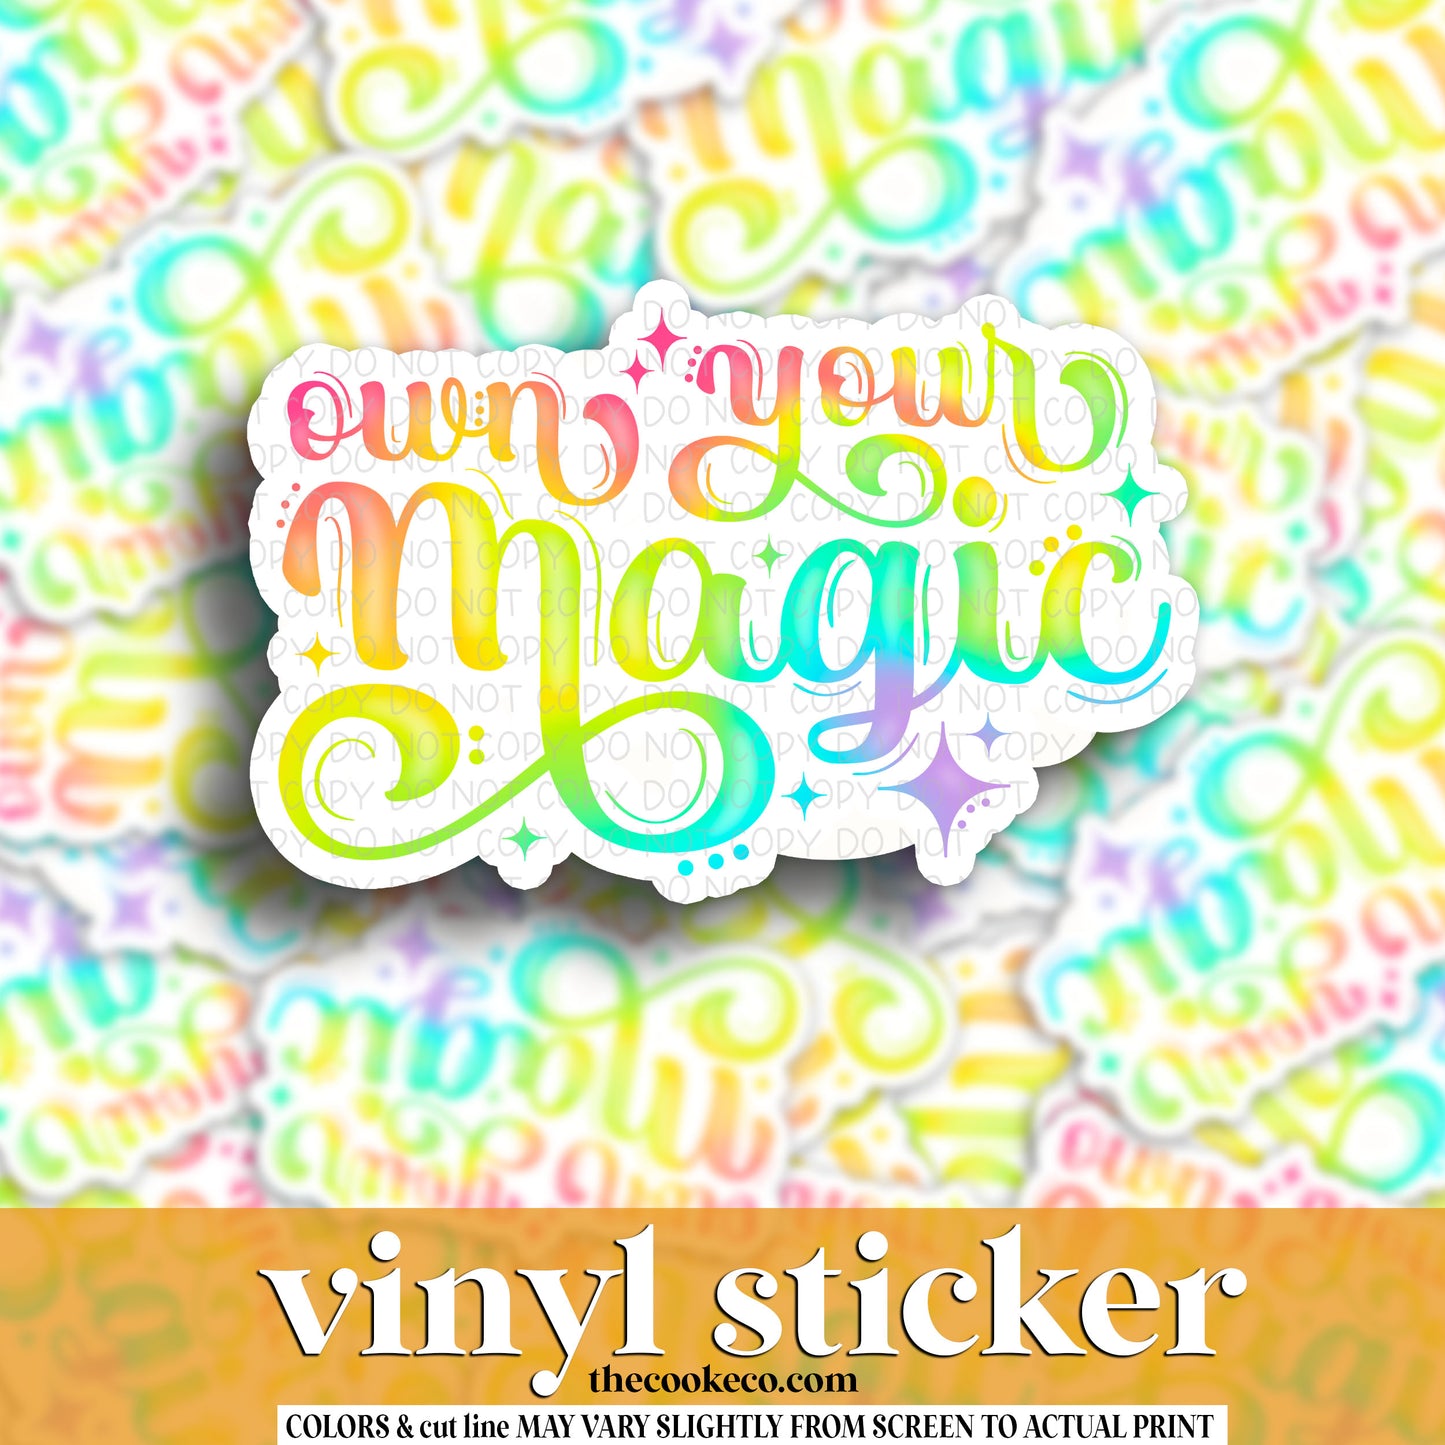 Vinyl Sticker | #V1491 - OWN YOUR MAGIC